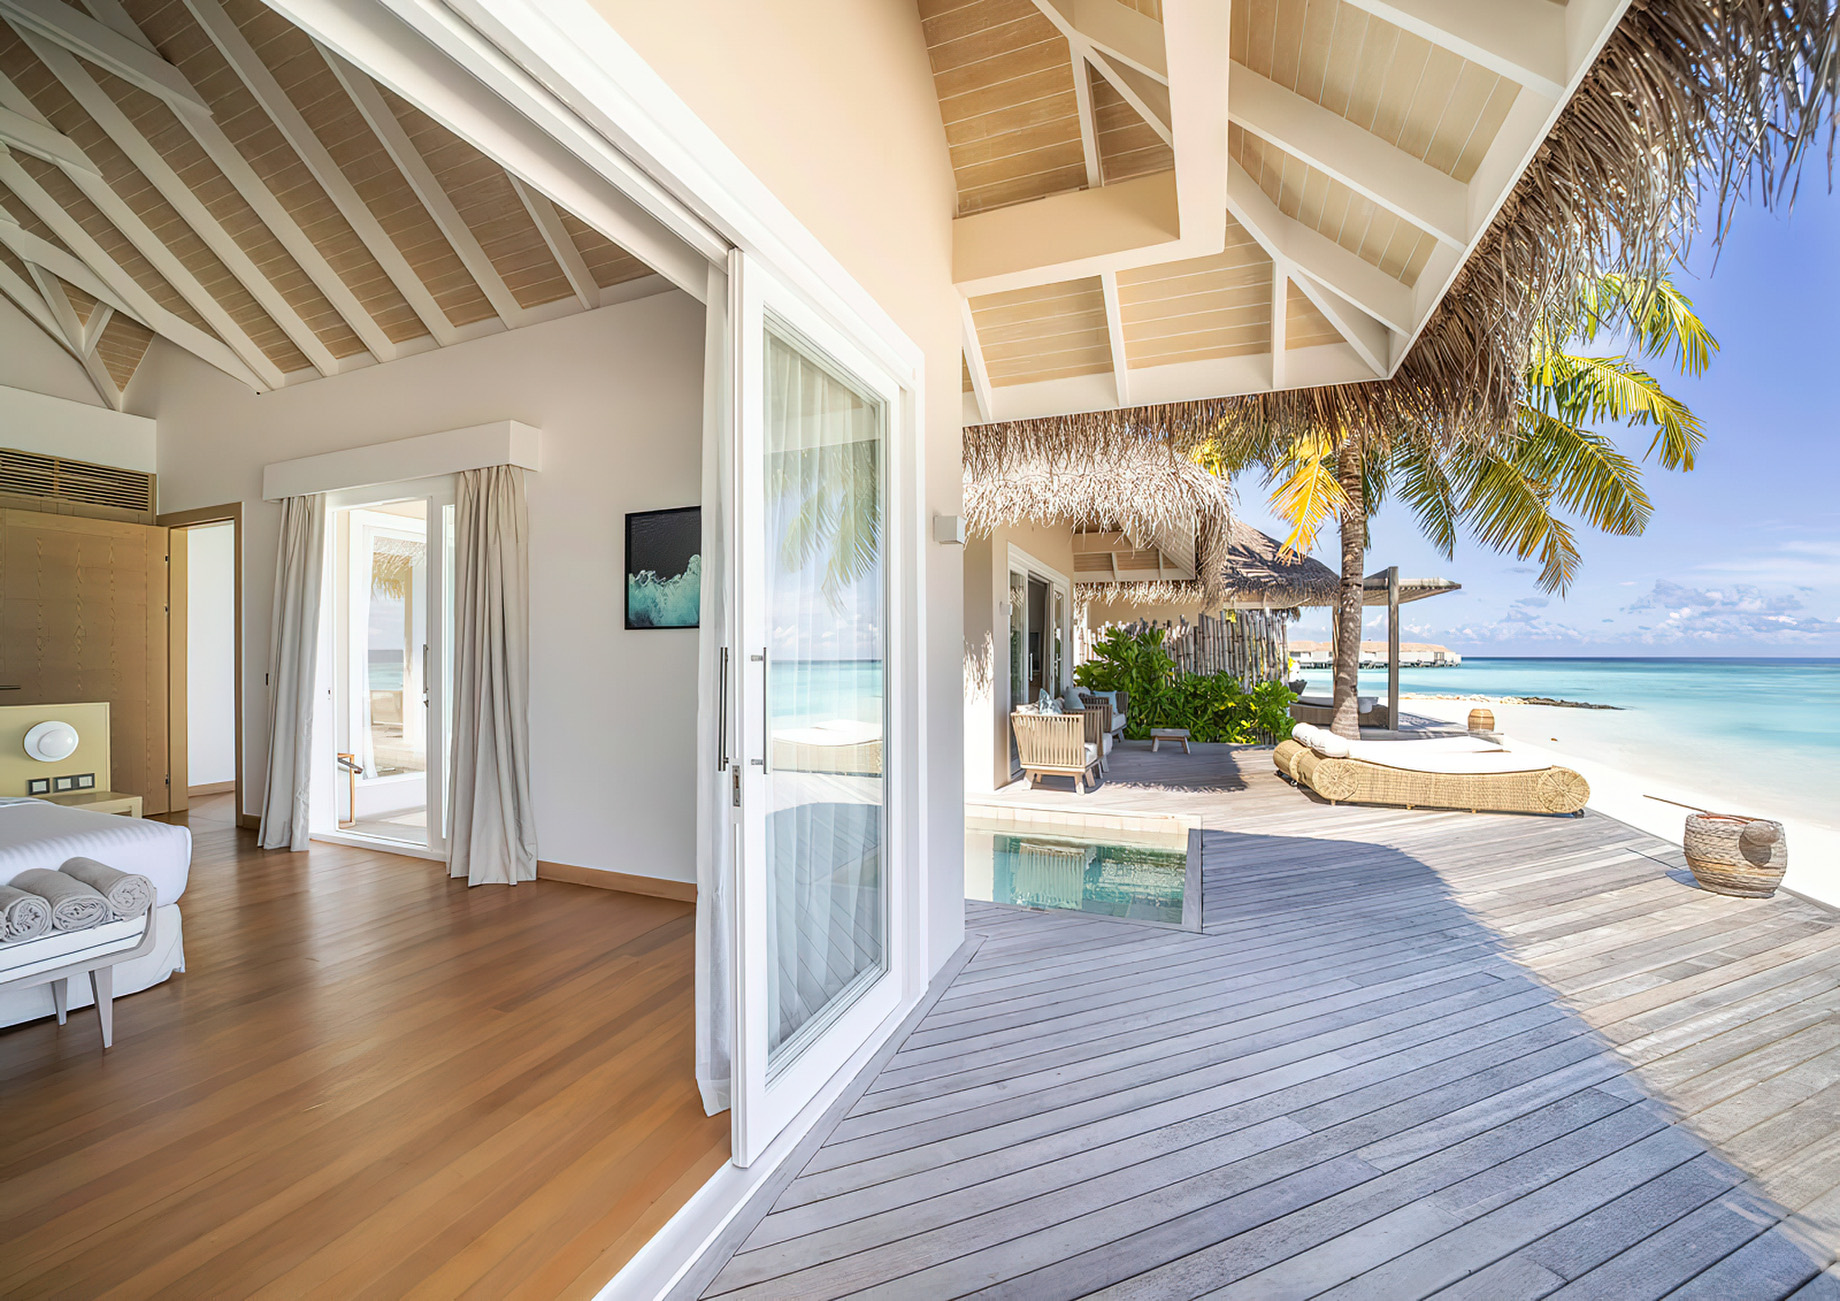 Baglioni Resort Maldives – Maagau Island, Rinbudhoo, Maldives – Beach Villa Pool Suite Bedroom View